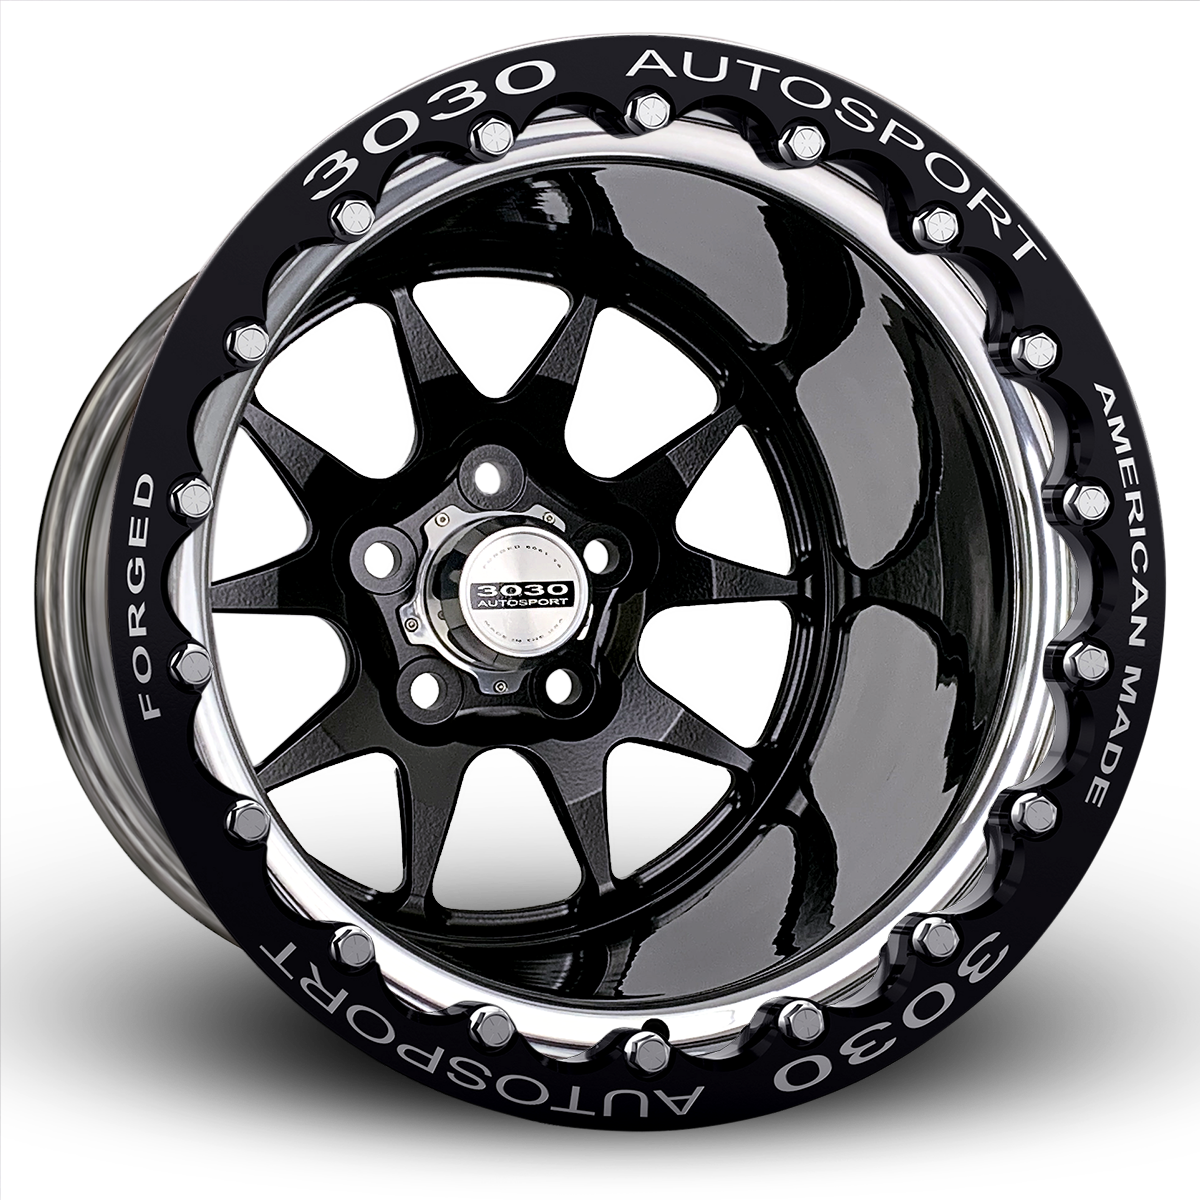 MACH-10 Double-Beadlock Wheel, Size: 15x12", Bolt Pattern: 5x4.75", Backspace: 5" [Black/Polished]